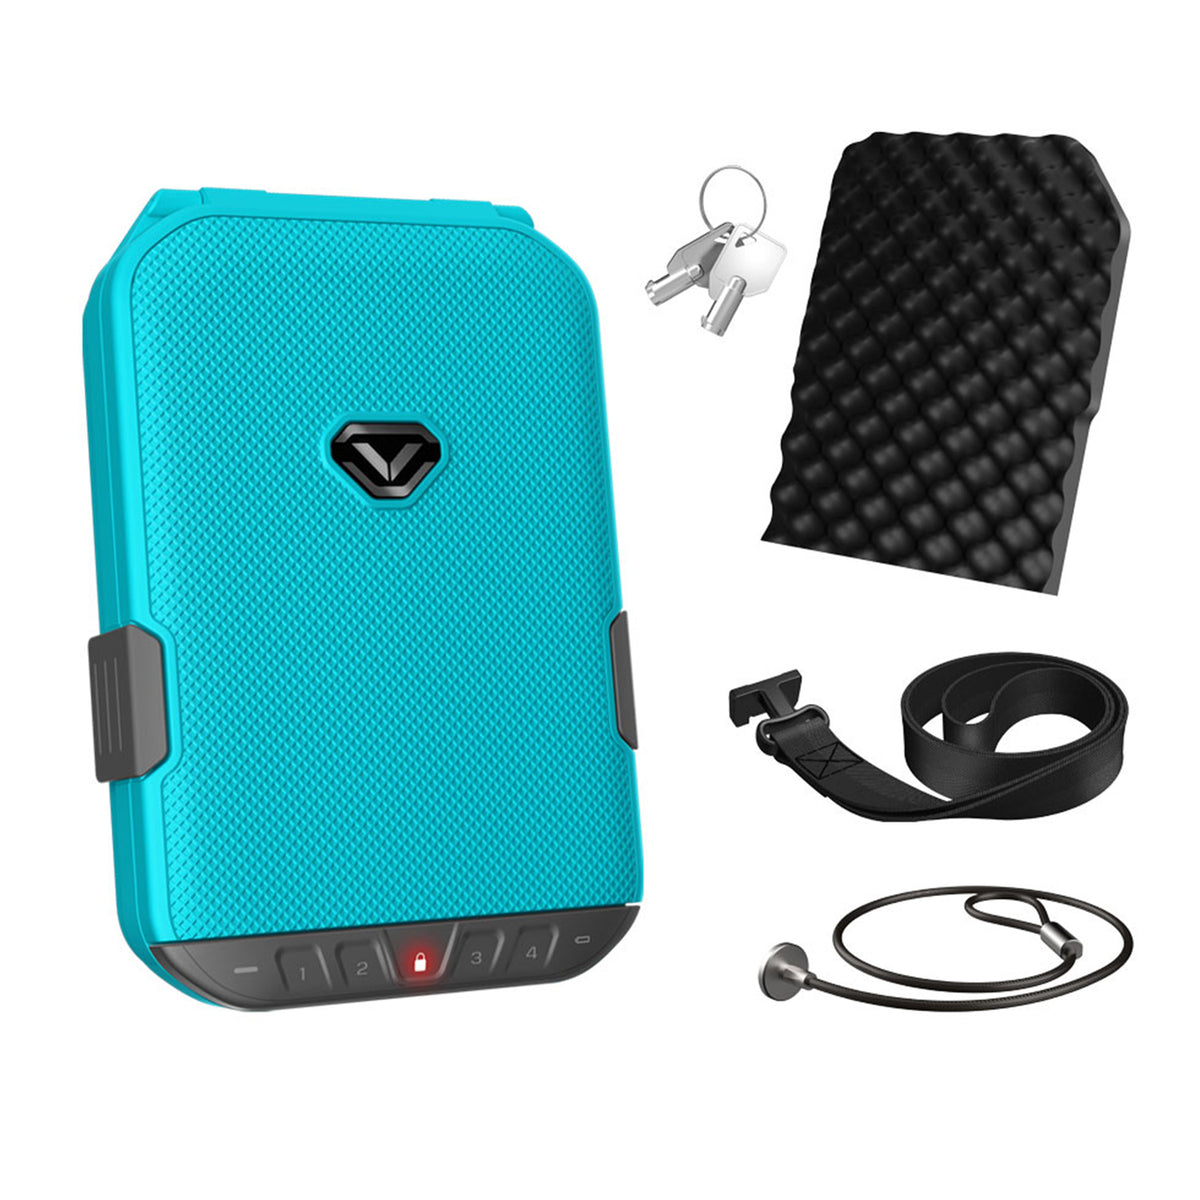 Vaultek - LifePod SlingBag Combo with Weather Resistant Lockbox and SlingBag